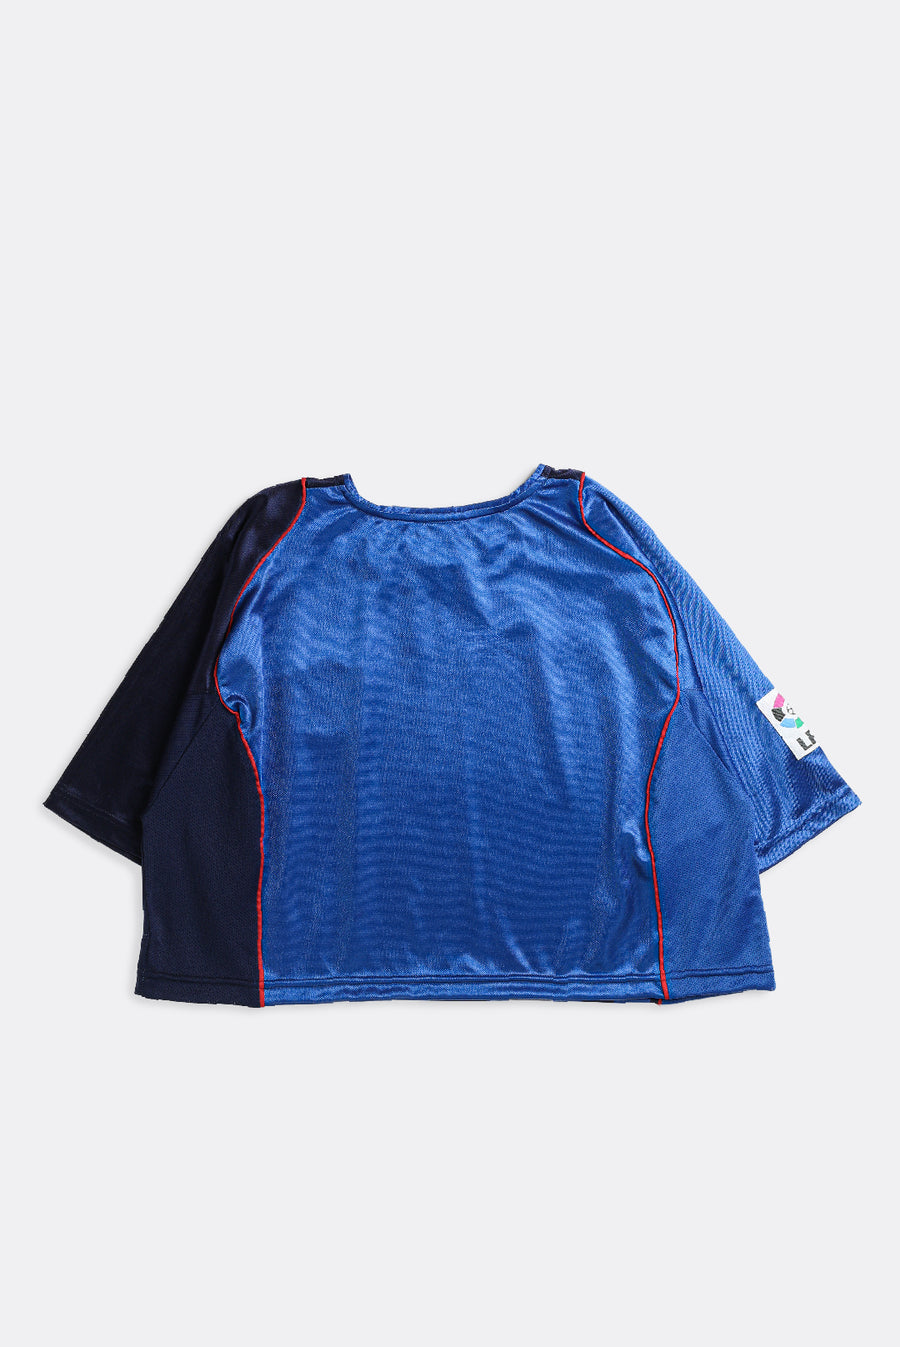 Rework Barcelona Crop Soccer Jersey - XL